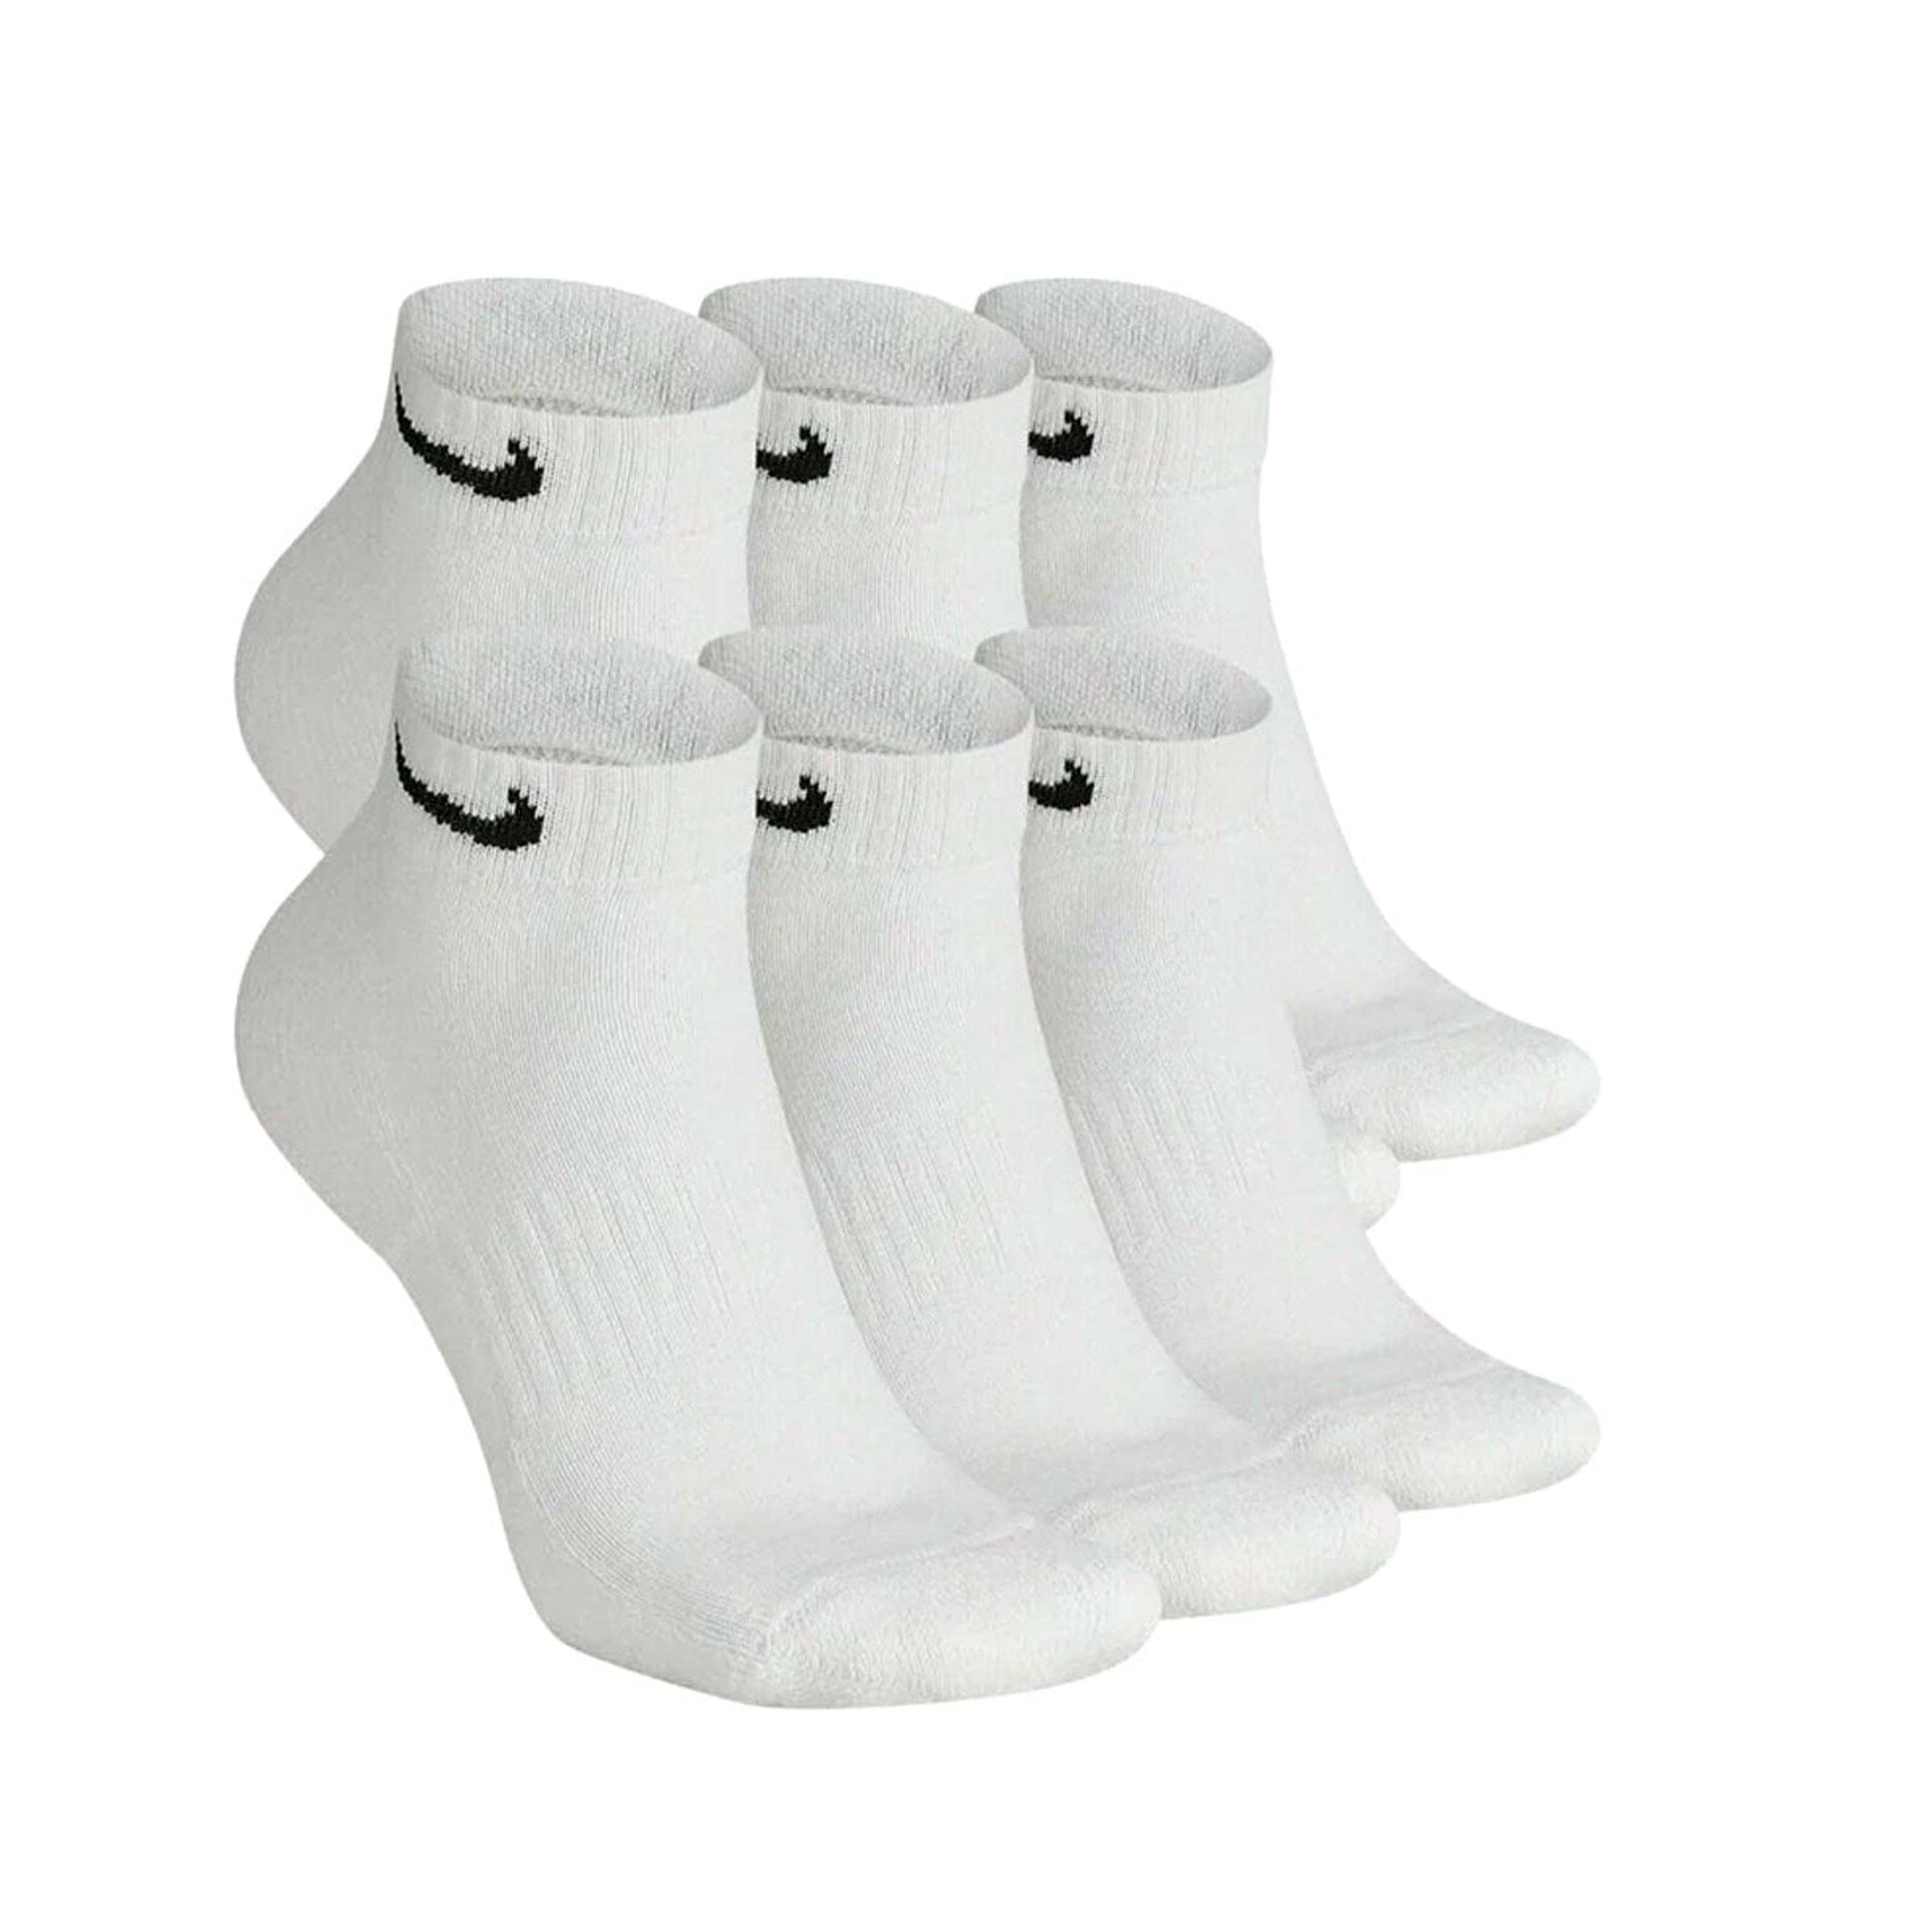 Alternate View 1 of Nike Men's Everyday Plus Cushioned Low Cut Training Socks White 